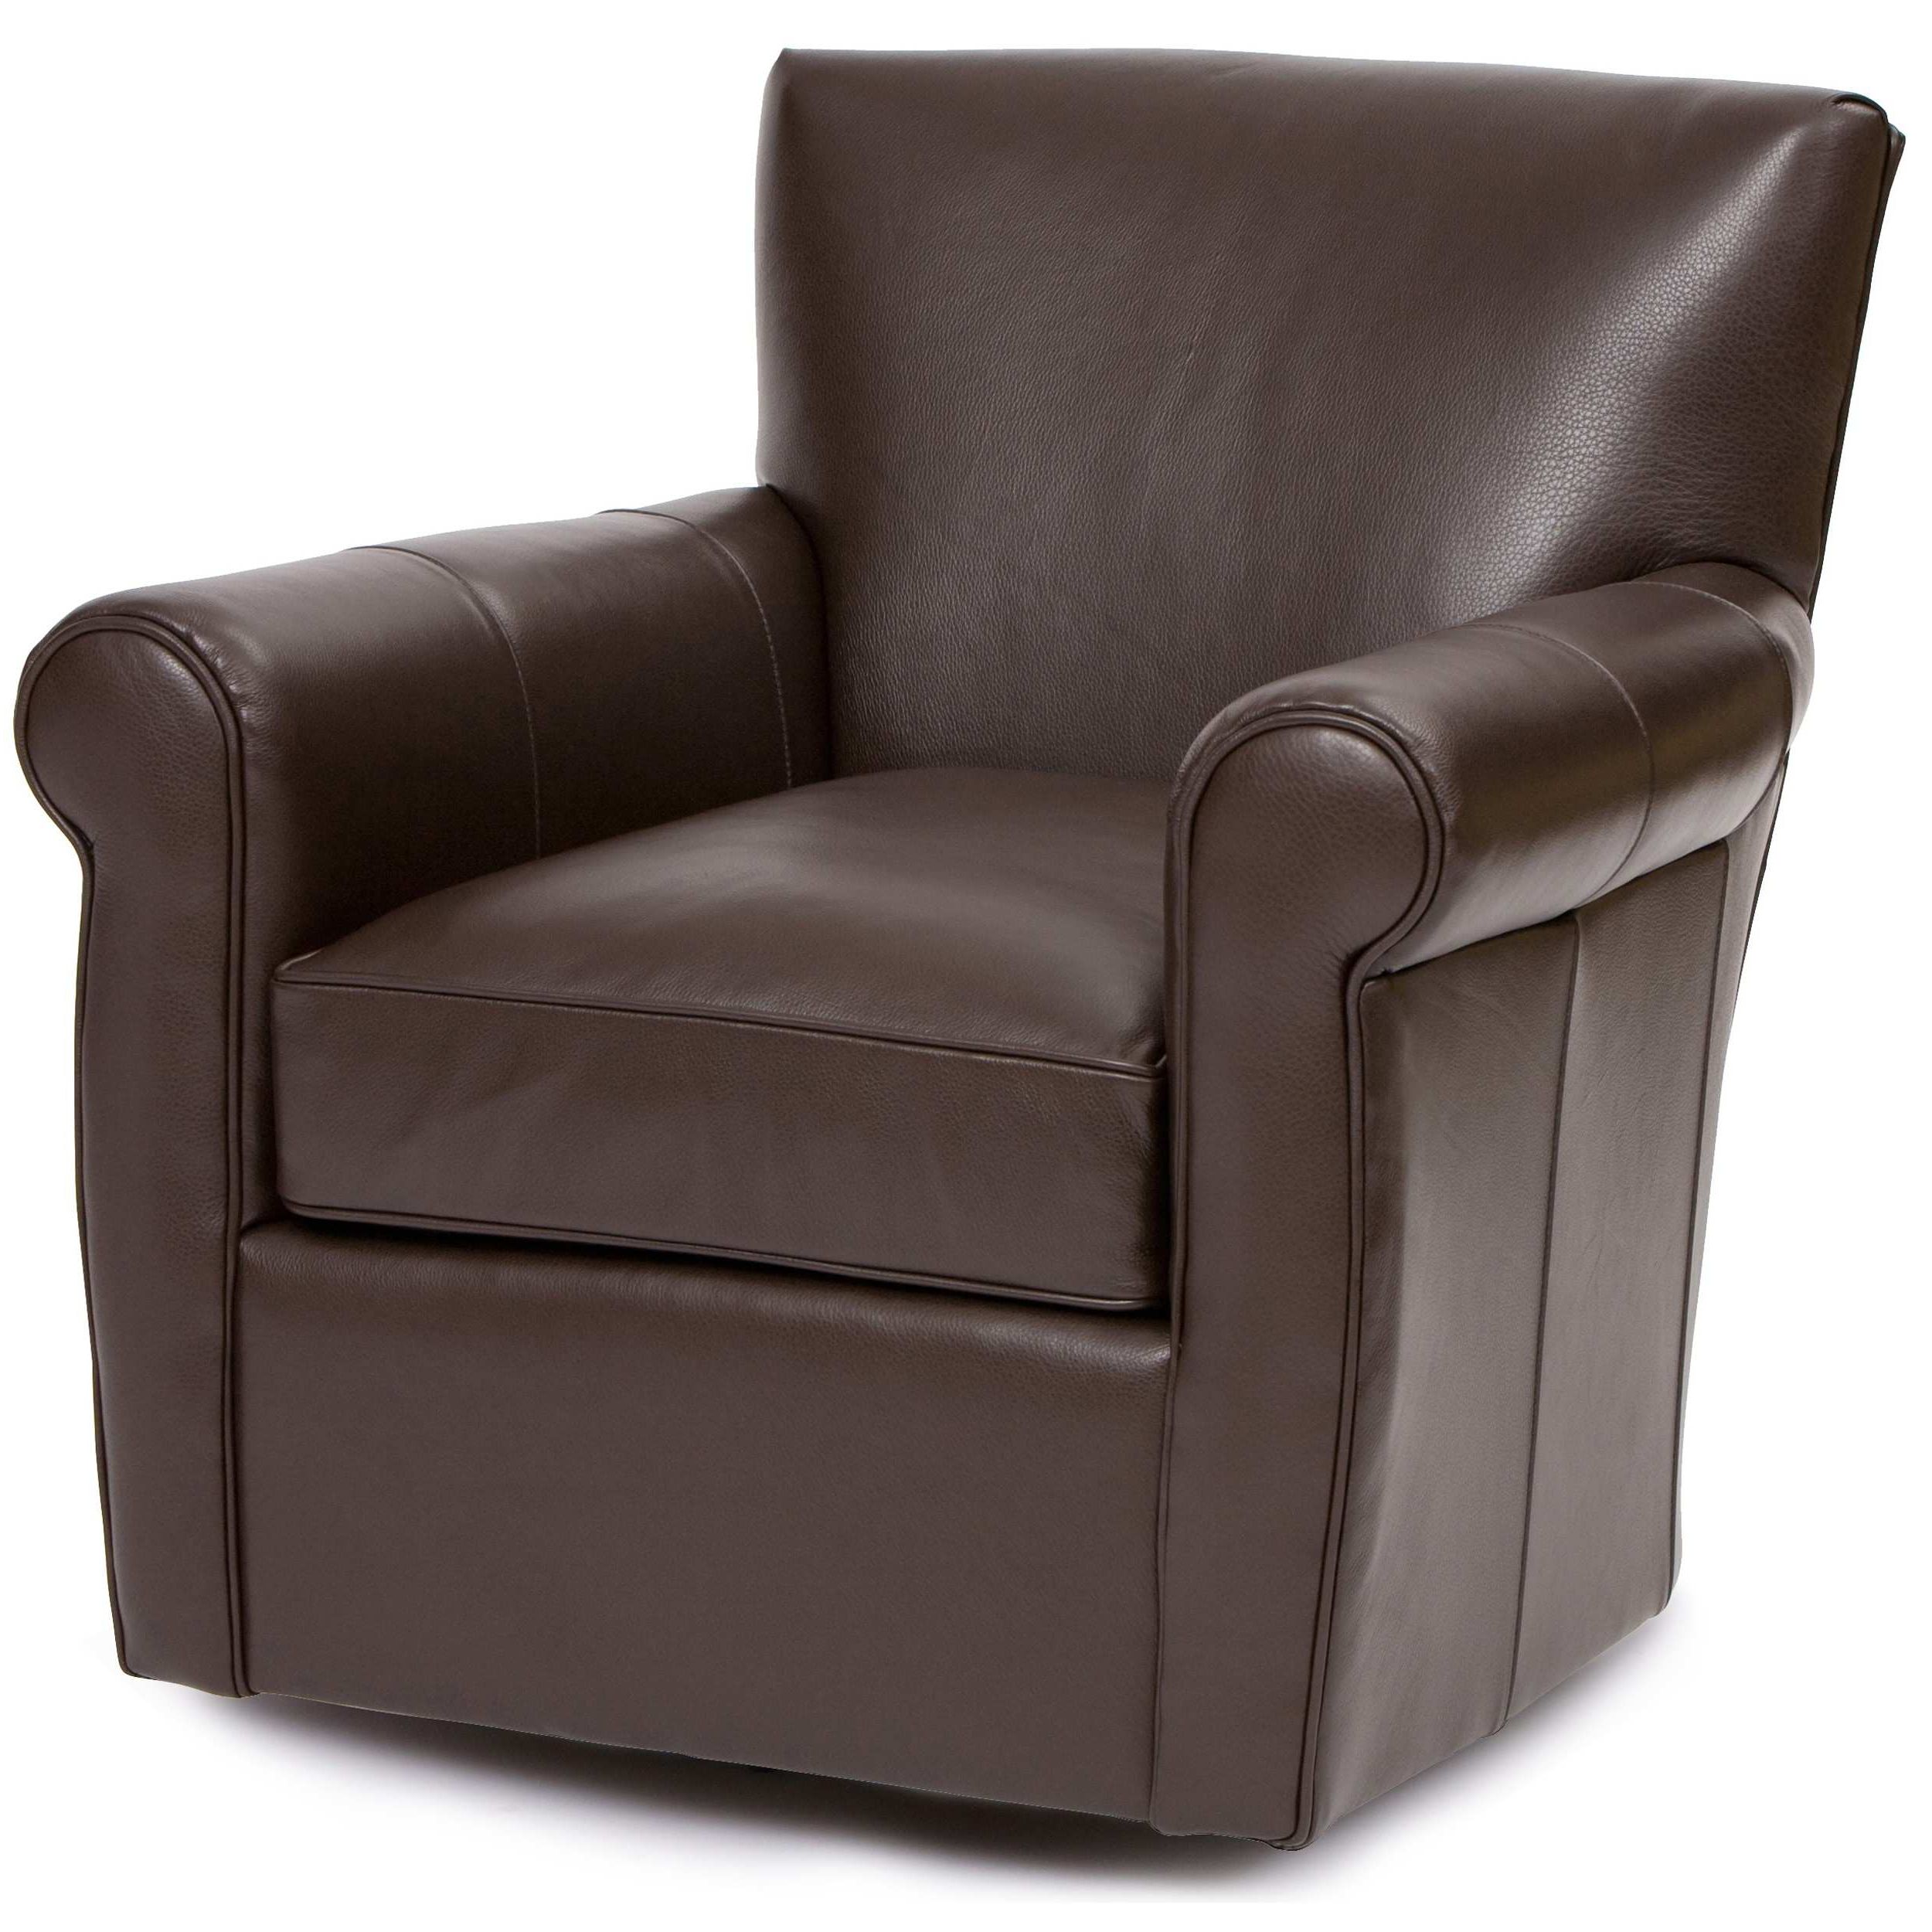 Peter Leather Swivel Chair, Livia Godiva Chairs Custom – Brightonandhove In Favorite Kawai Leather Swivel Chairs (View 3 of 20)